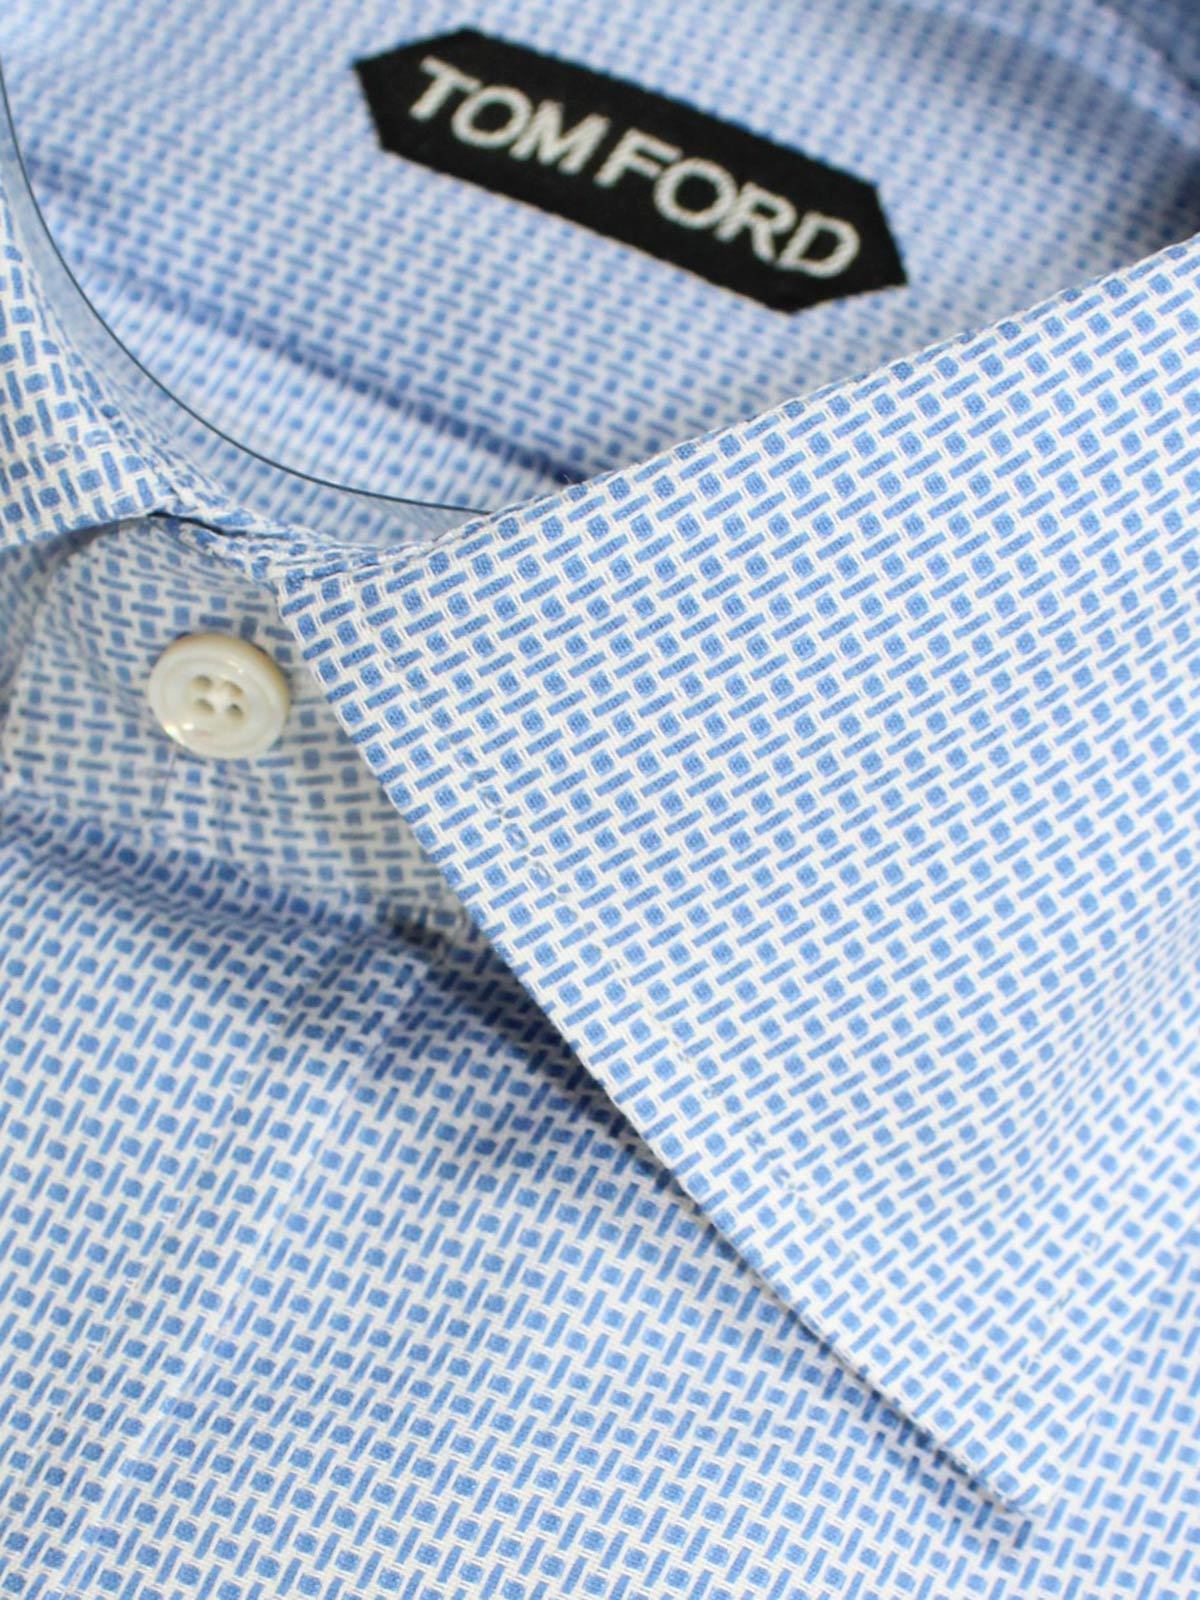 Tom Ford Dress Shirt Blue White Basketweave Design 39 - 15 1/2 Modern - Tie  Deals